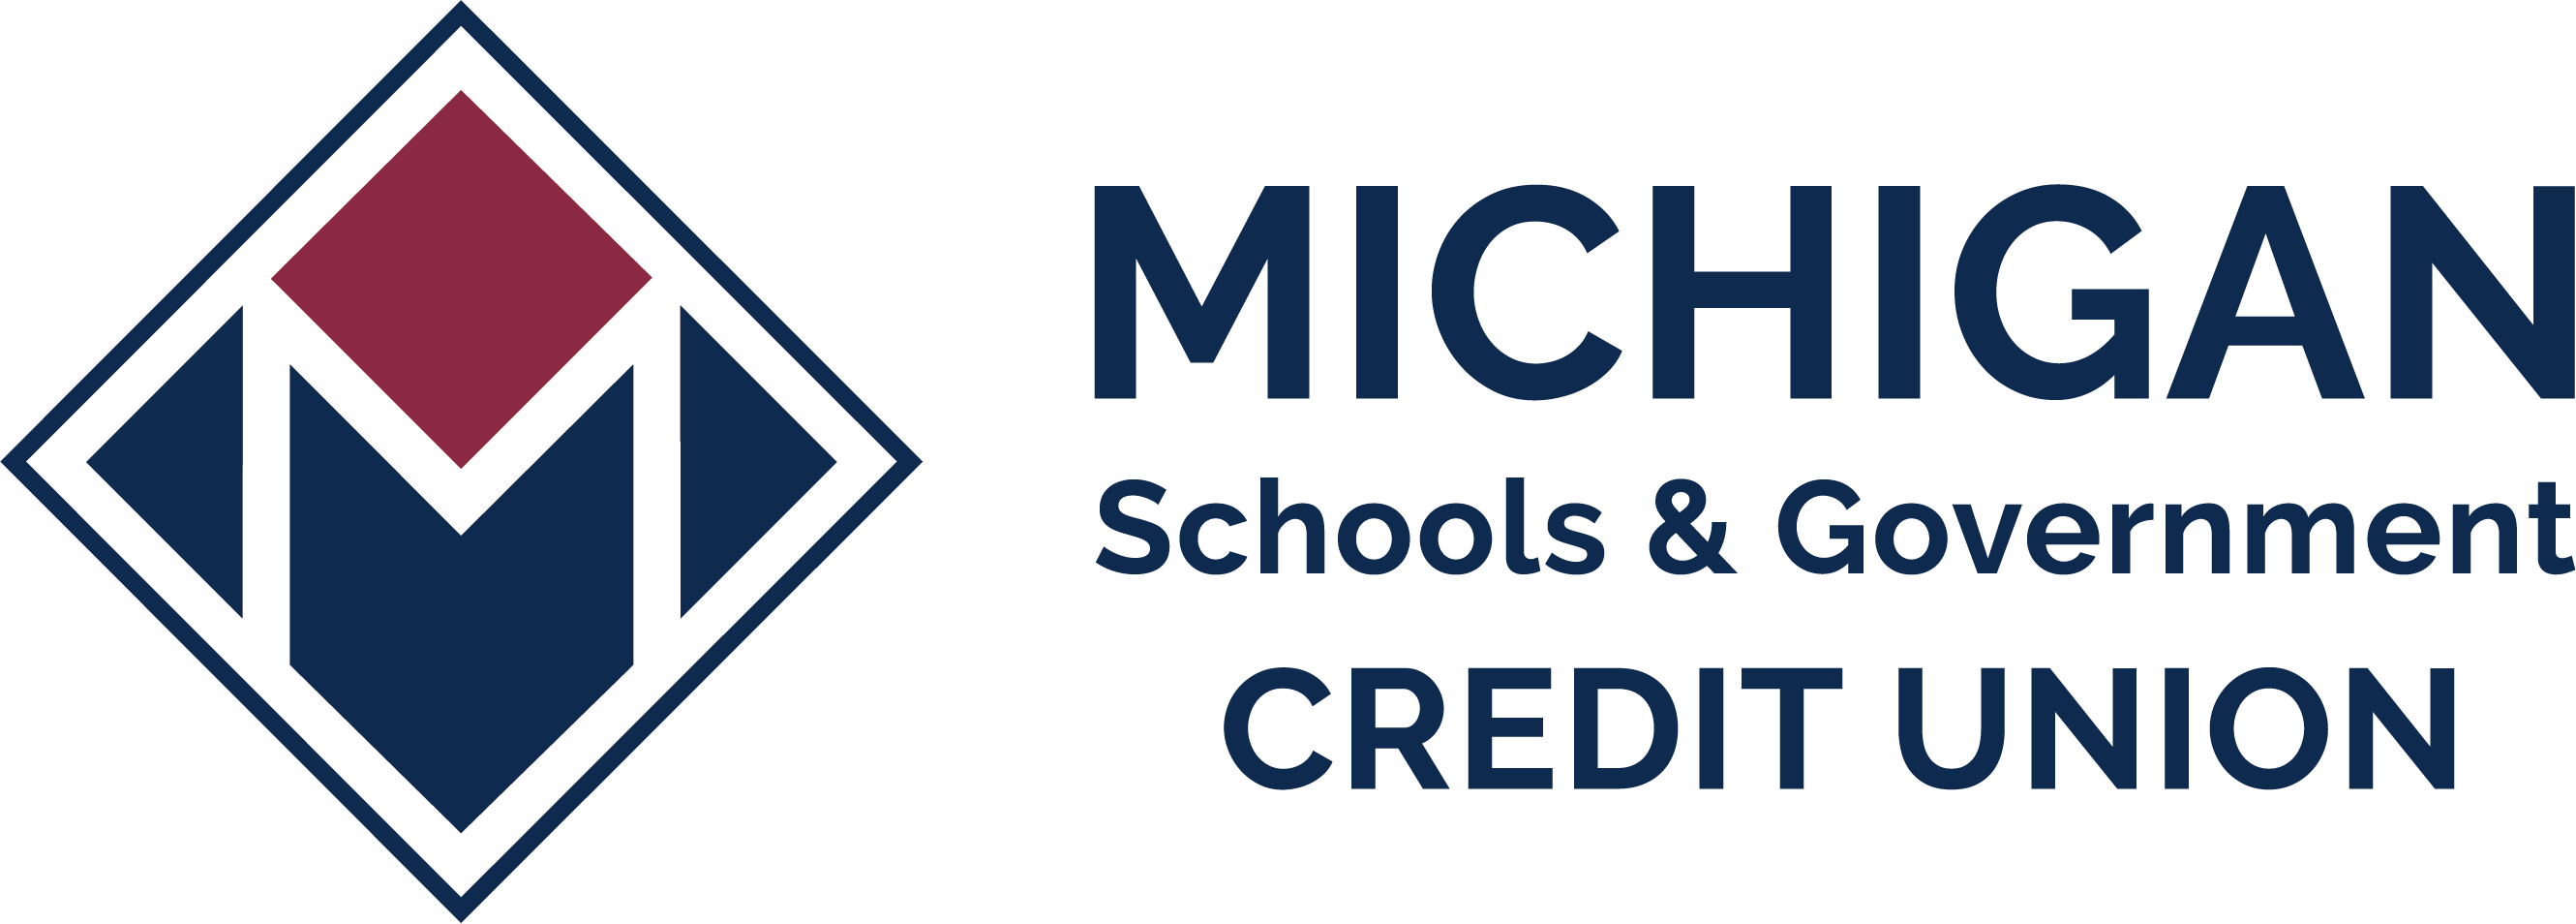 Michigan Schools and Government Credit Union Company Logo